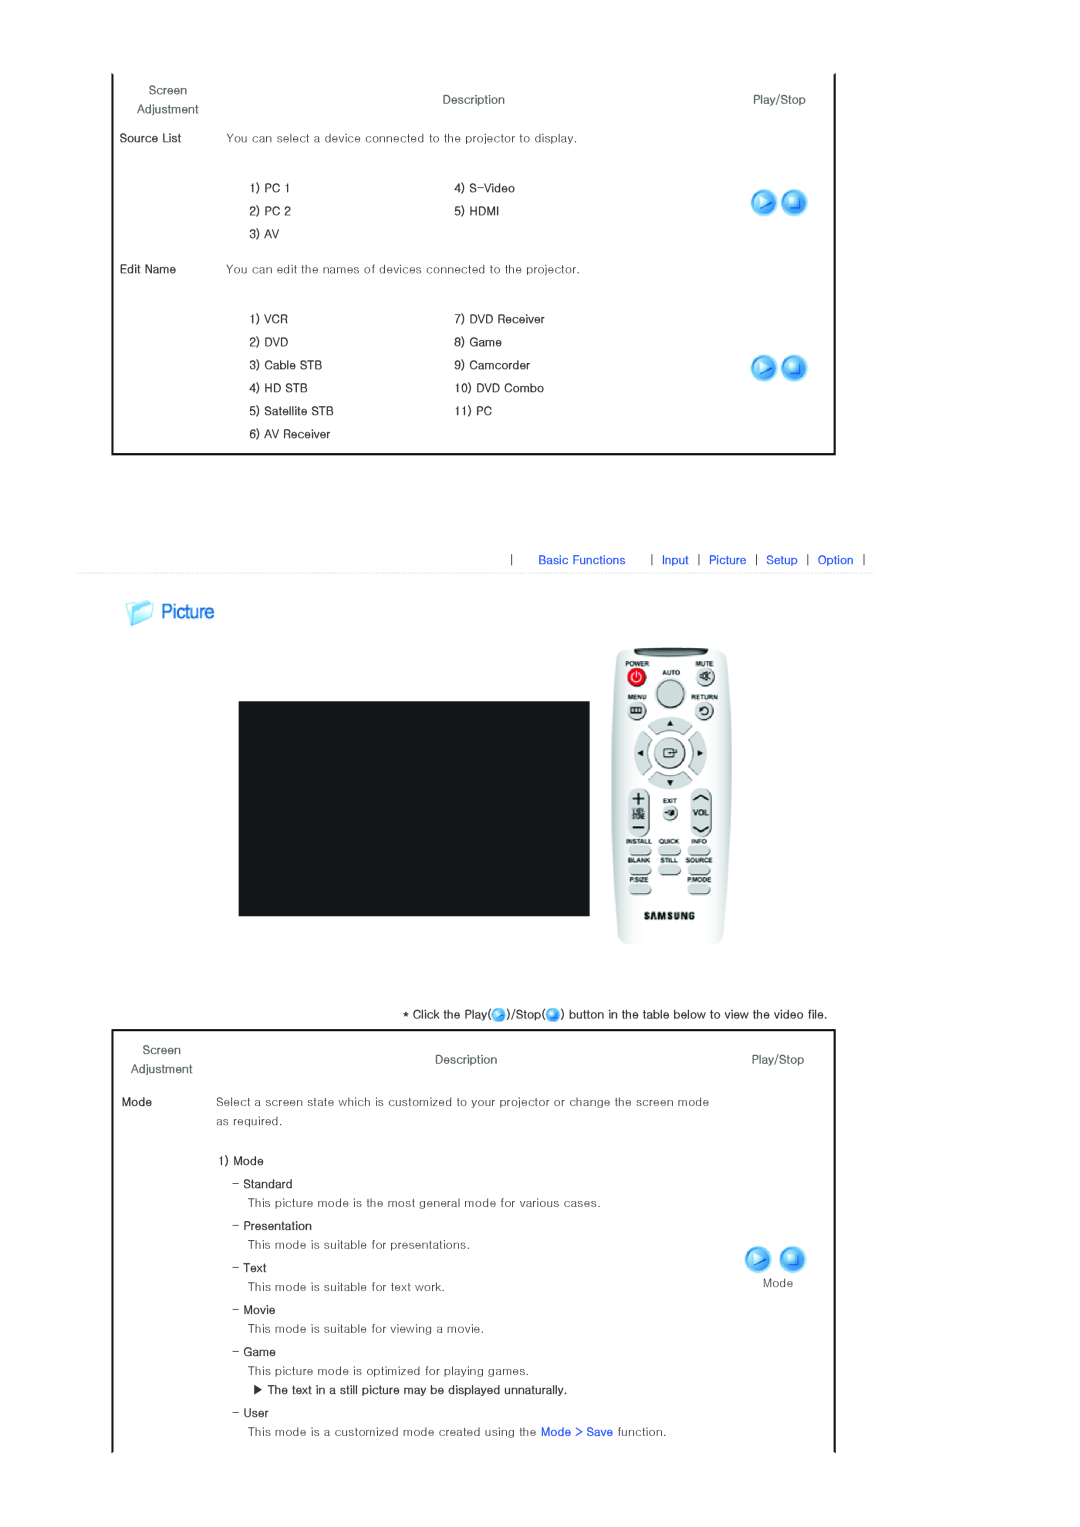 Sharp SP-L300 manual Screen DescriptionPlay/Stop Adjustment, Basic Functions, Input Picture Setup Option 